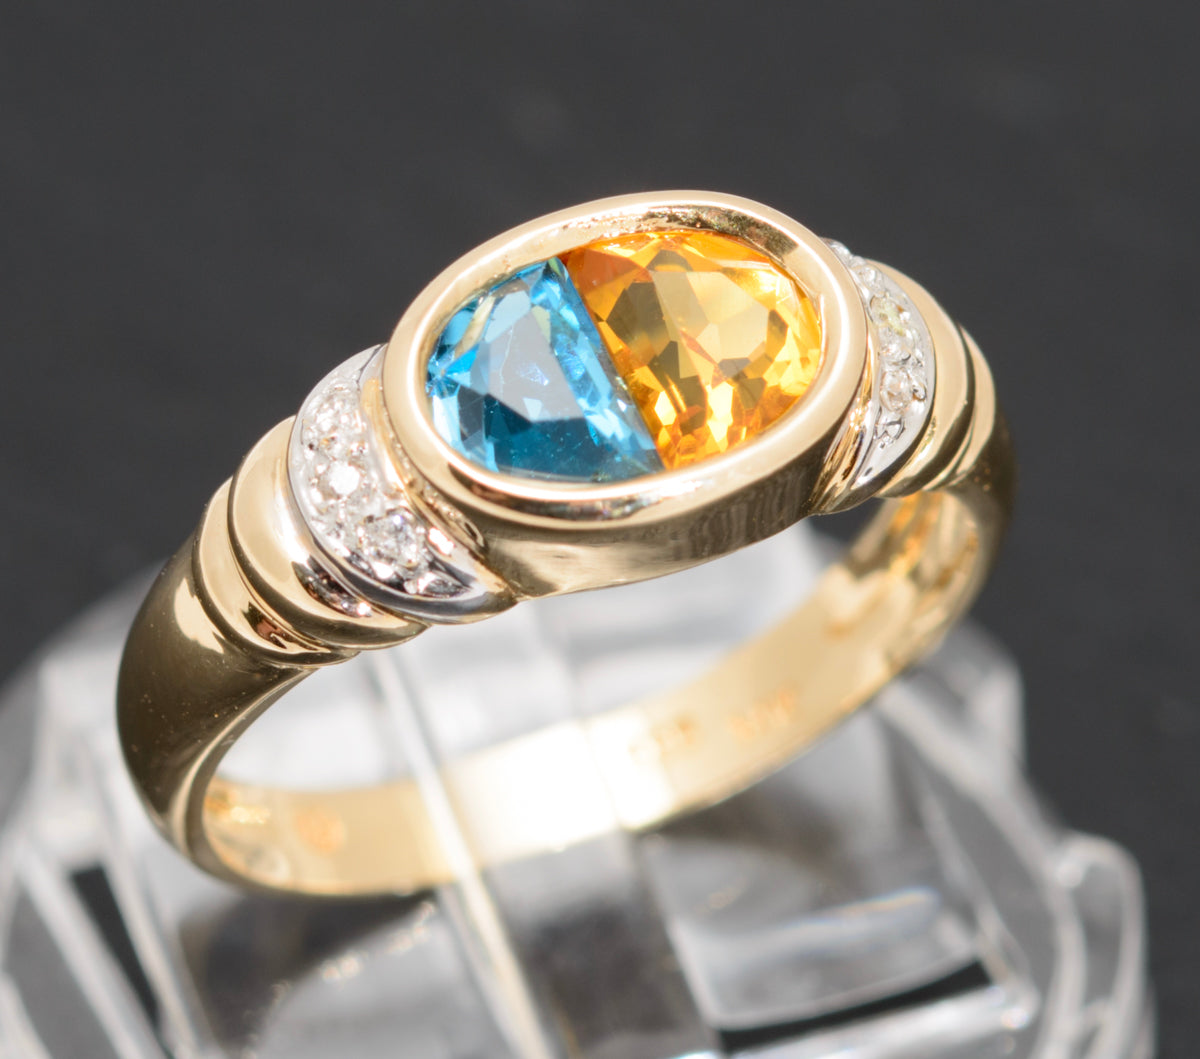 14k Gold Ladies Dress Ring With Blue Topaz & Citrine Gemstone Diamond Highlights (A1624)